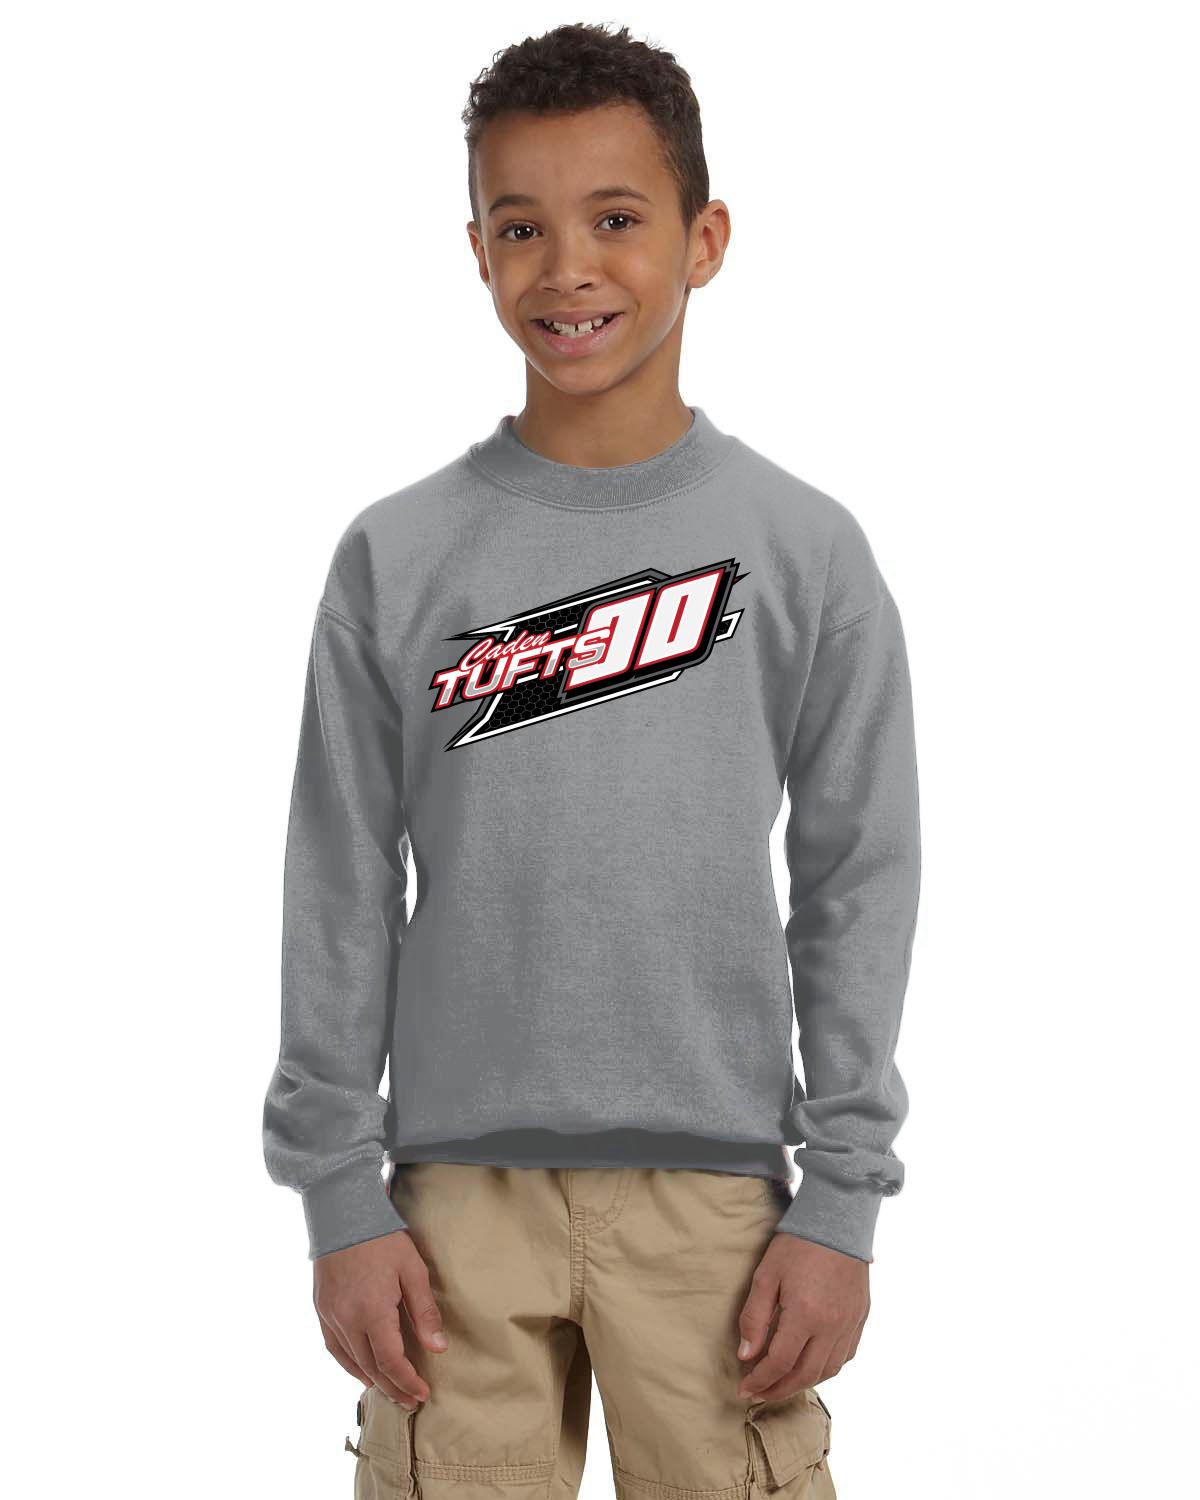 Caden Tufts Legends Racing Youth Crew Neck Sweater